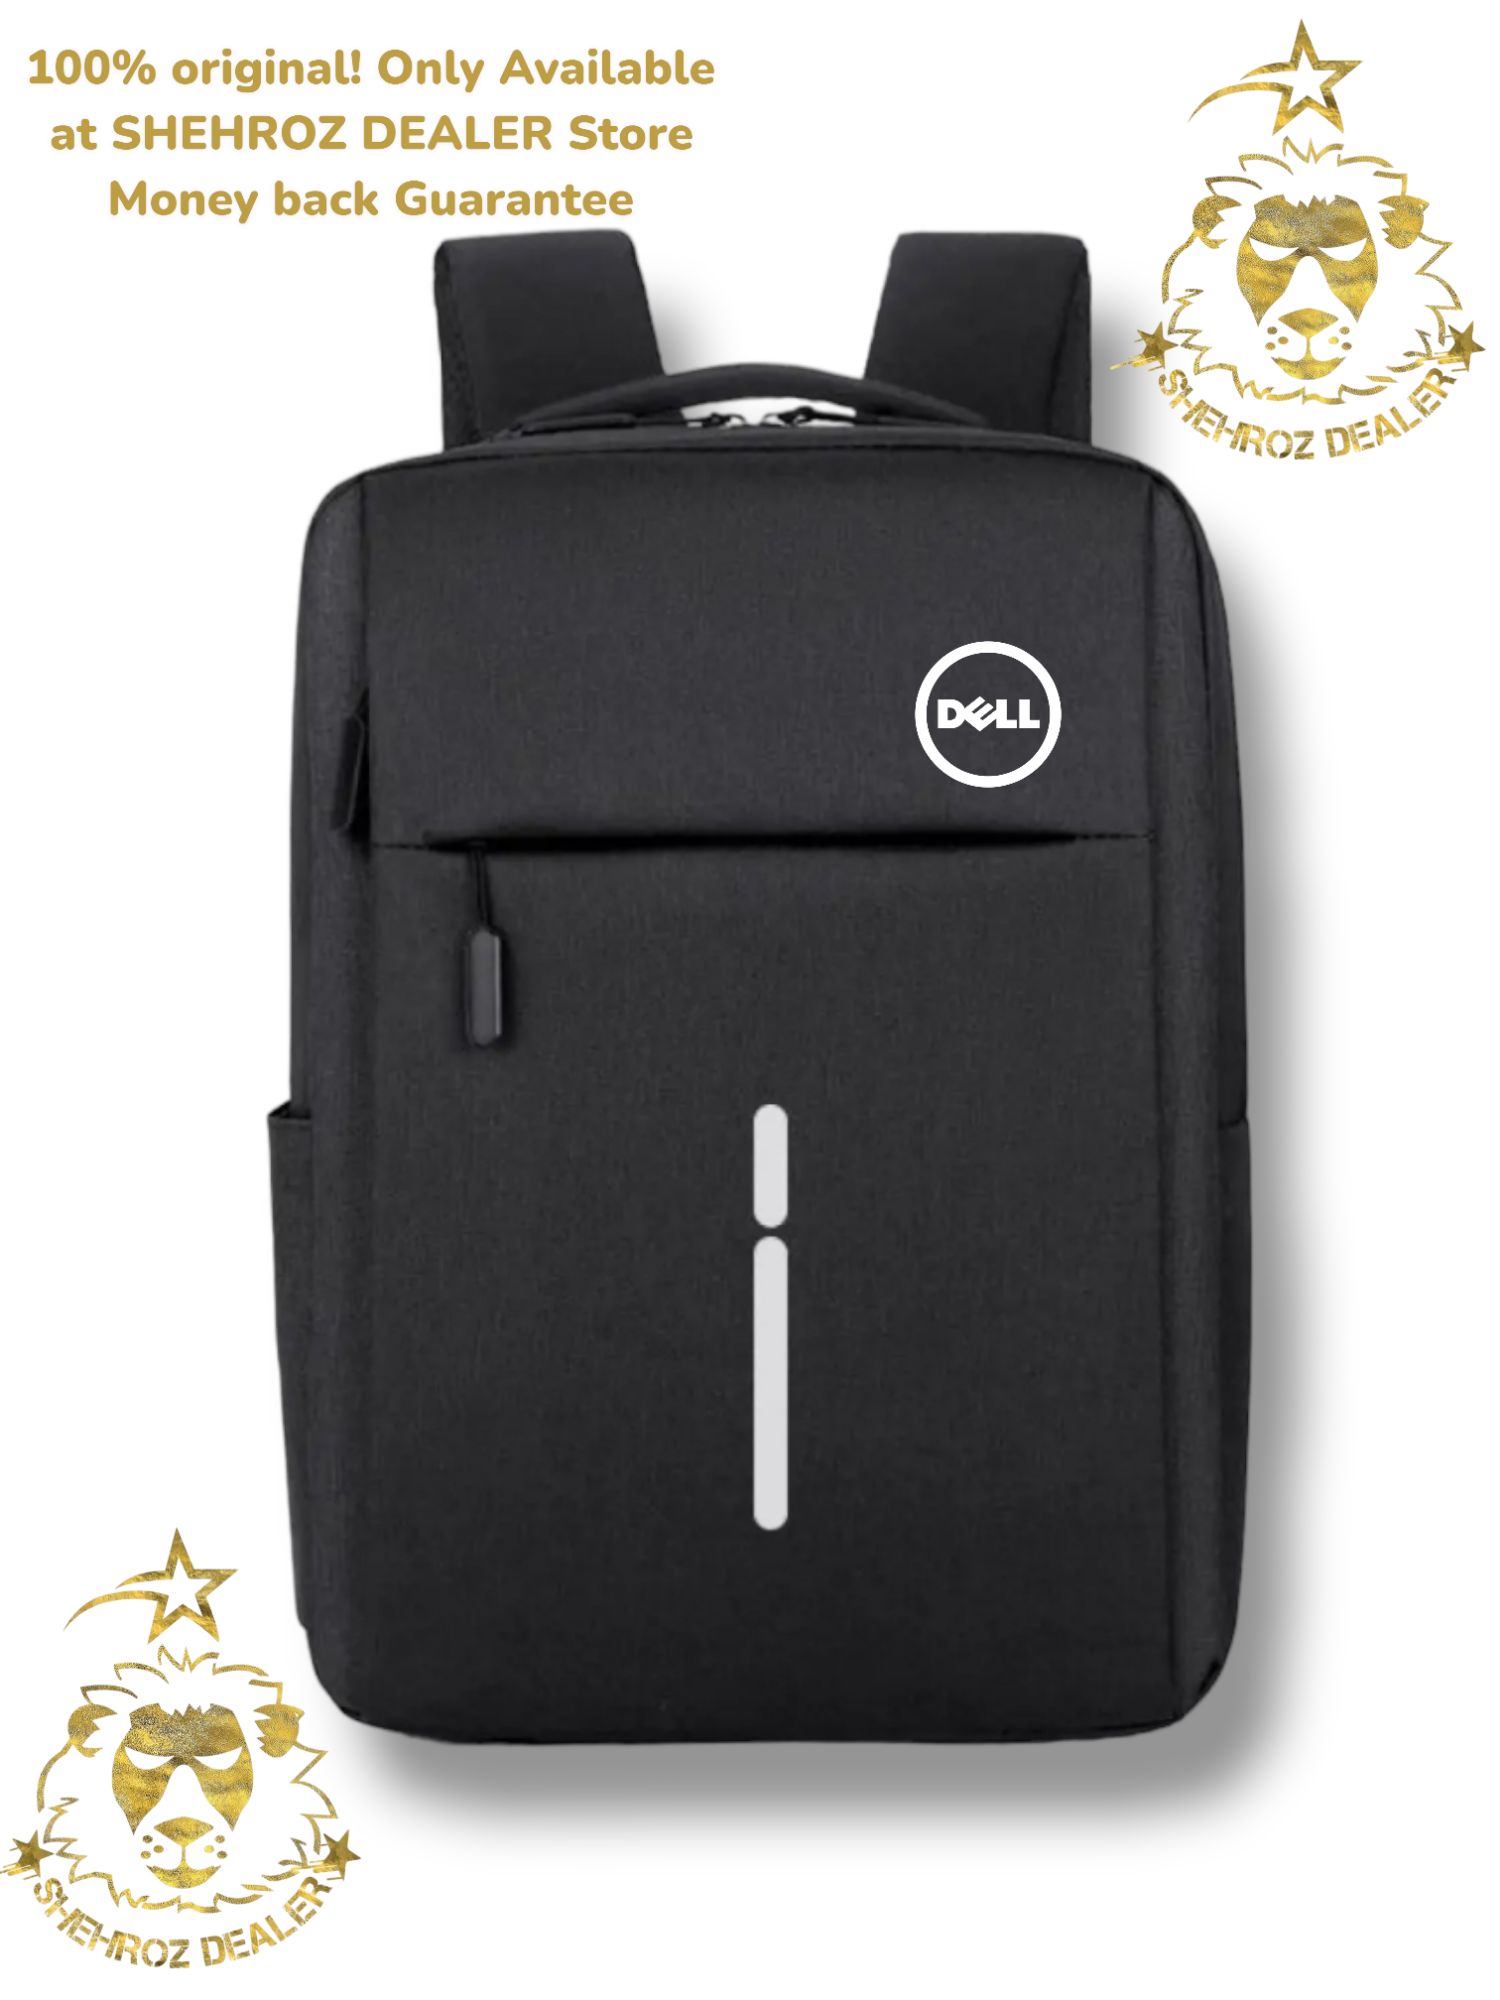 Dell Laptop Bag | eBay